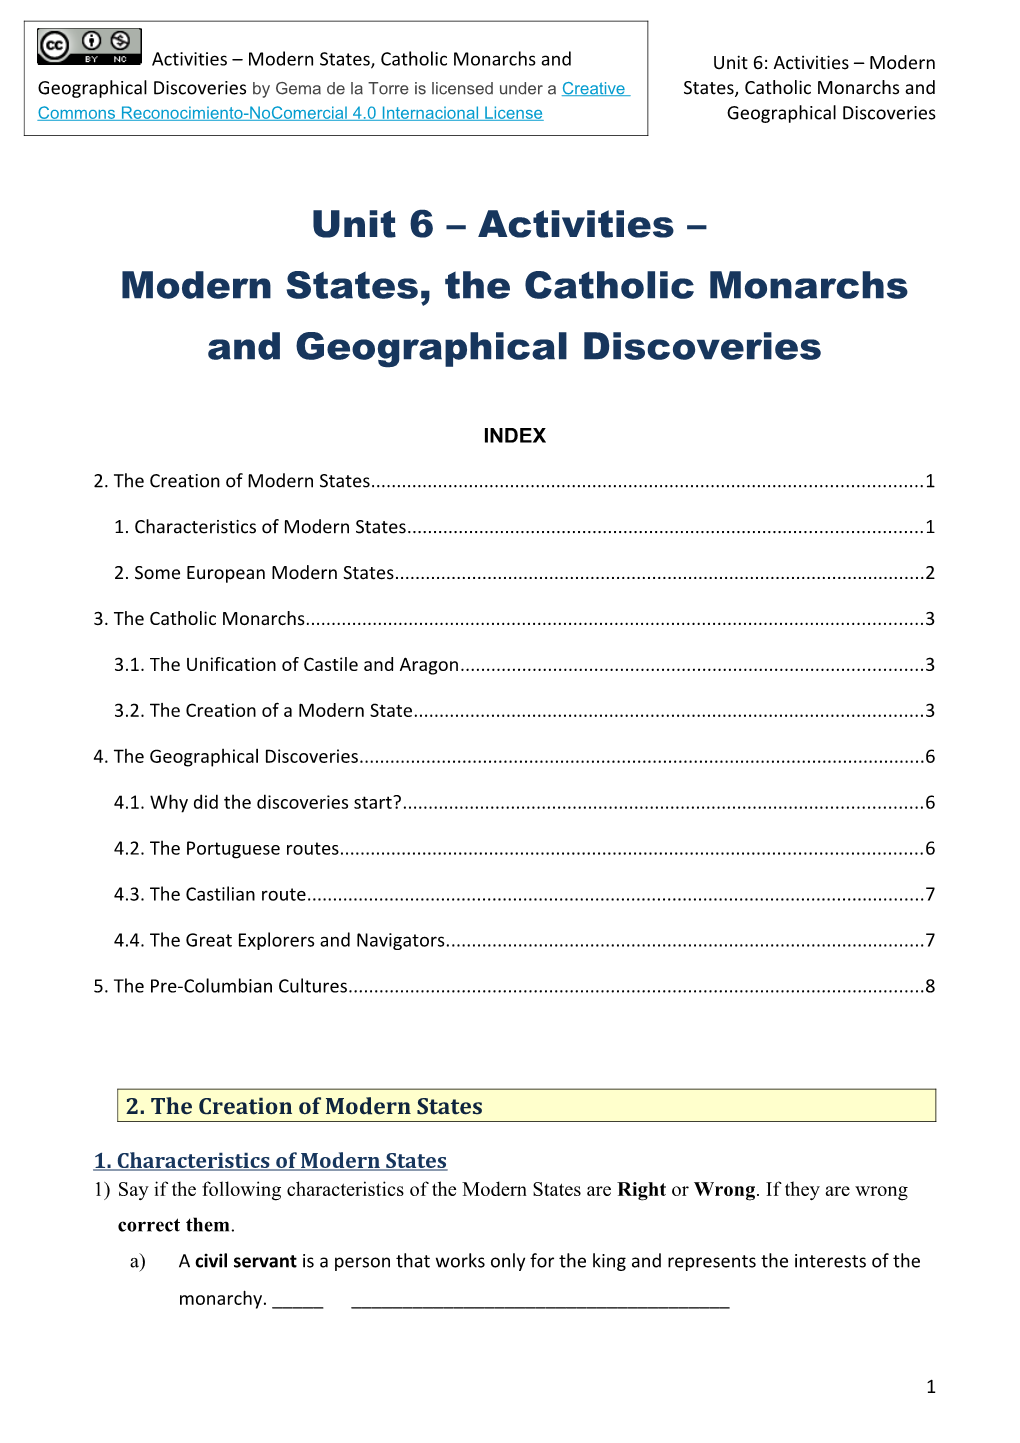 States, Catholic Monarchs And